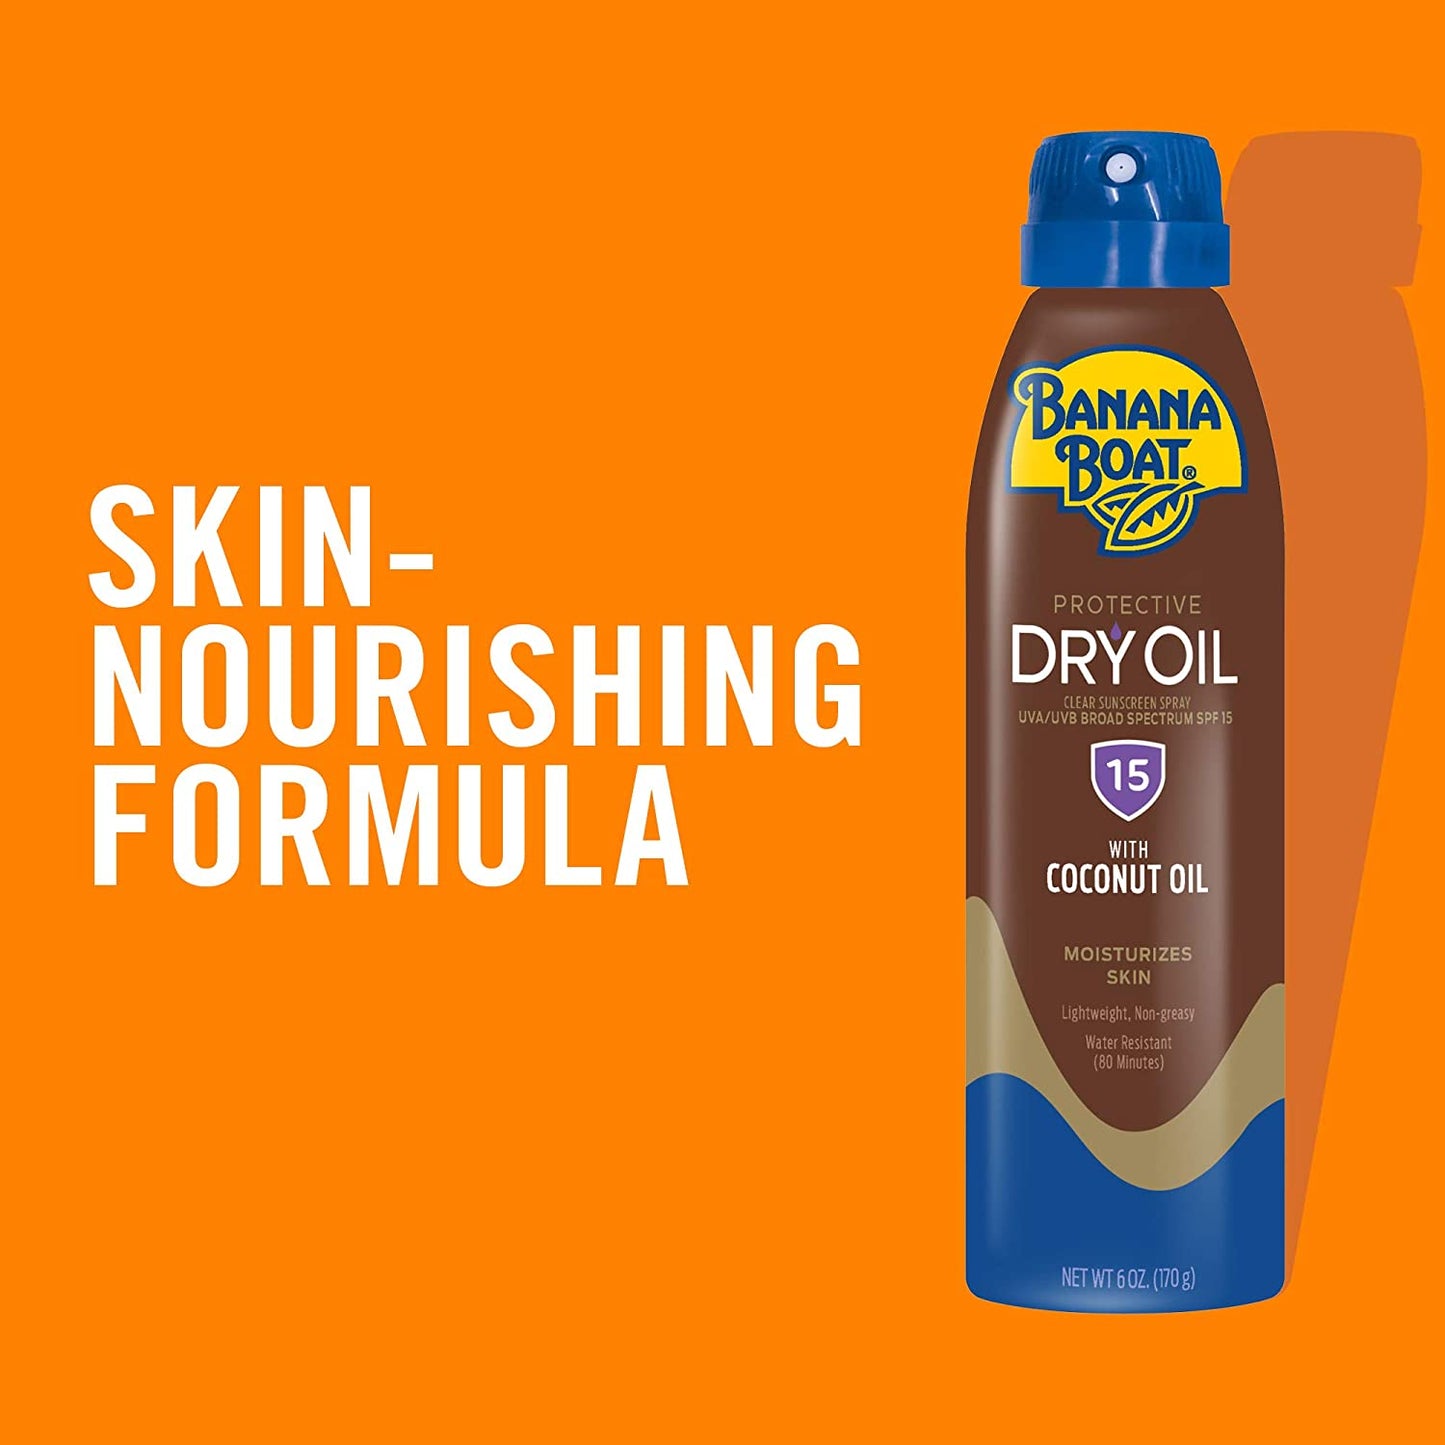 Banana Boat Protective Dry Oil Clear Sunscreen Spray SPF 15 with Coconut Oil Moisturizes Skin 6 oz